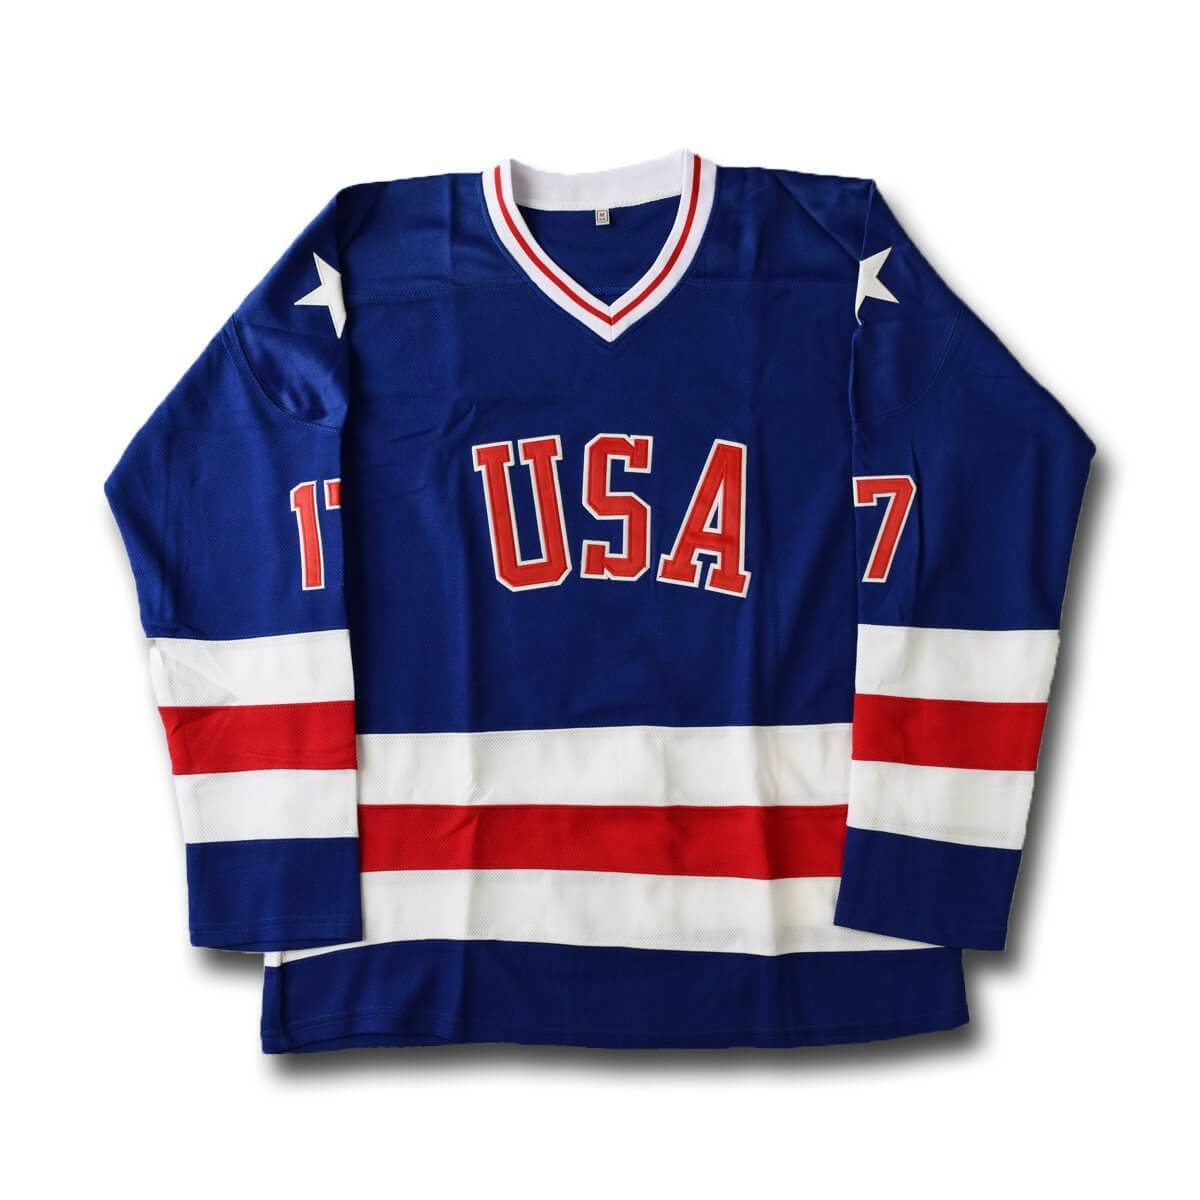 Jack O'Callahan - Jersey 1980 Olympic USA Hockey Size 3XL